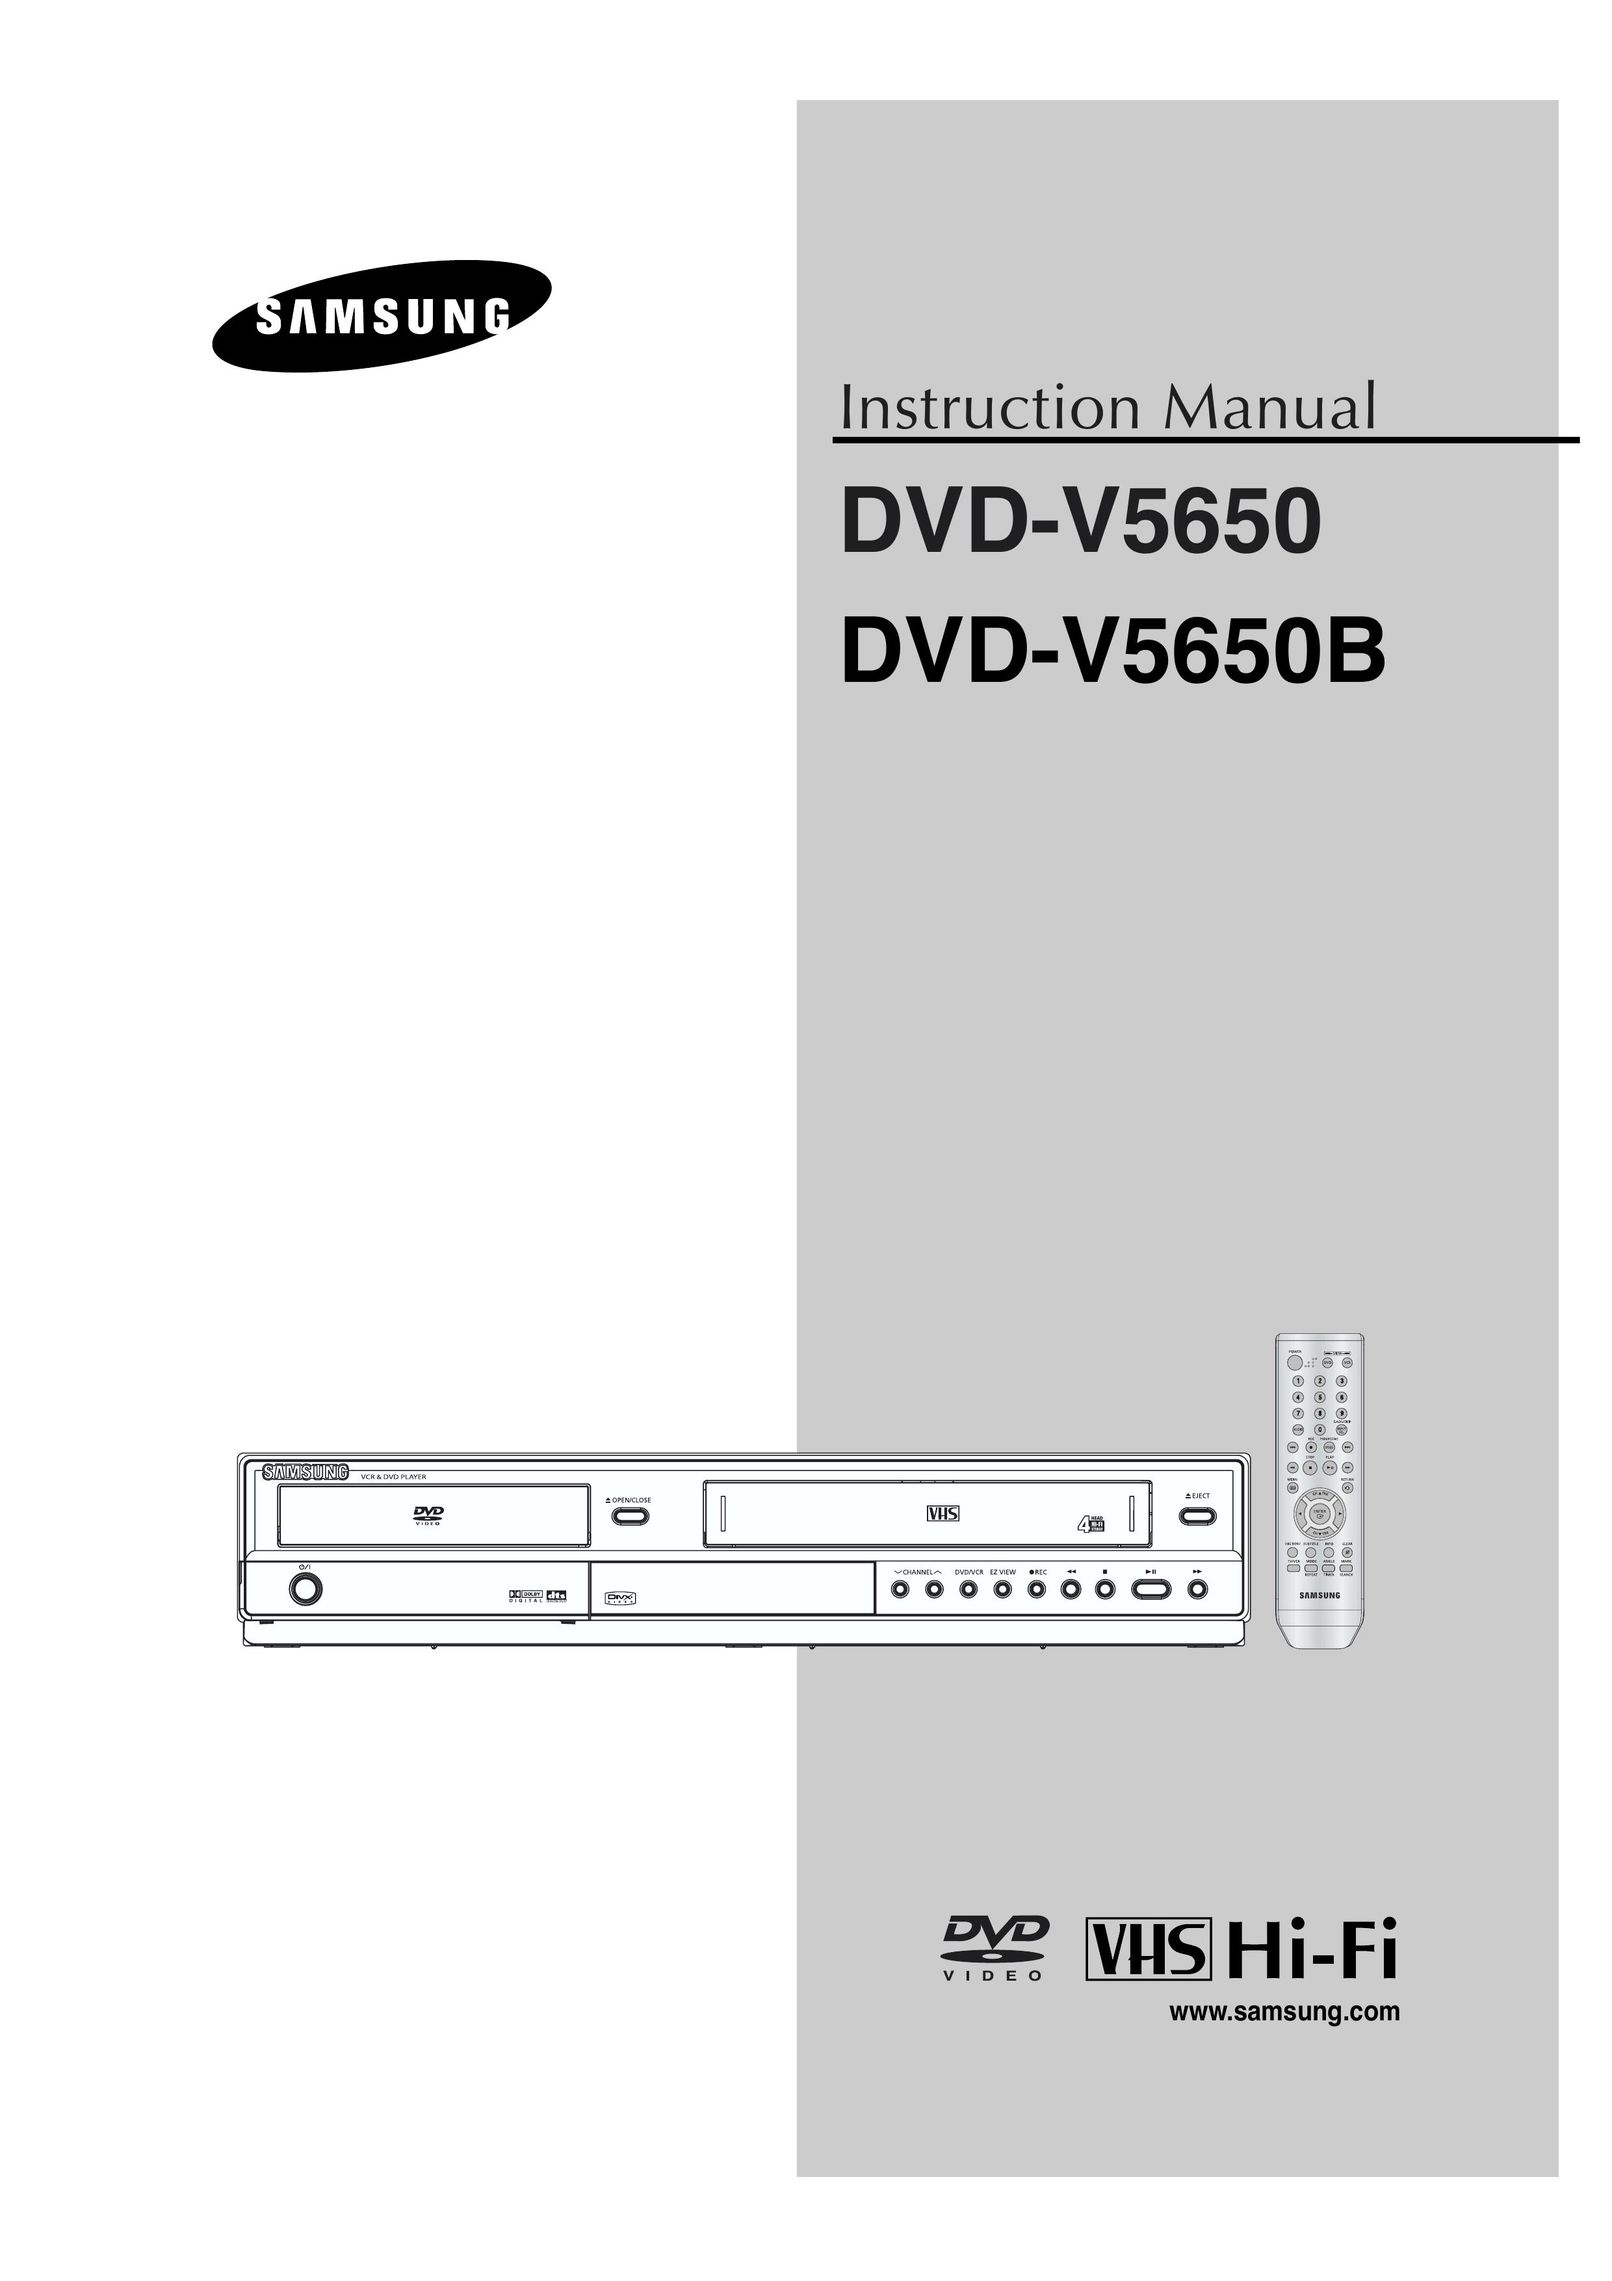 Samsung DVD-V5650 MP3 Player User Manual